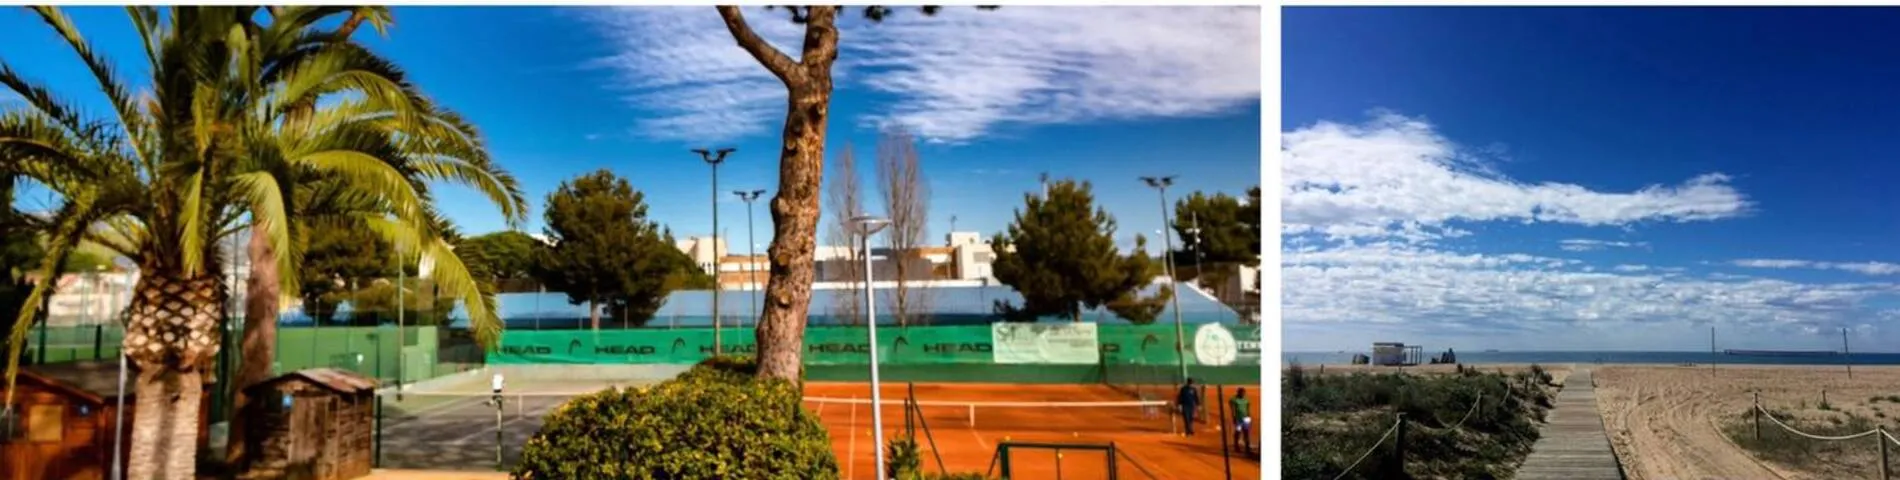 Barcelona Tennis Academy зображення 1